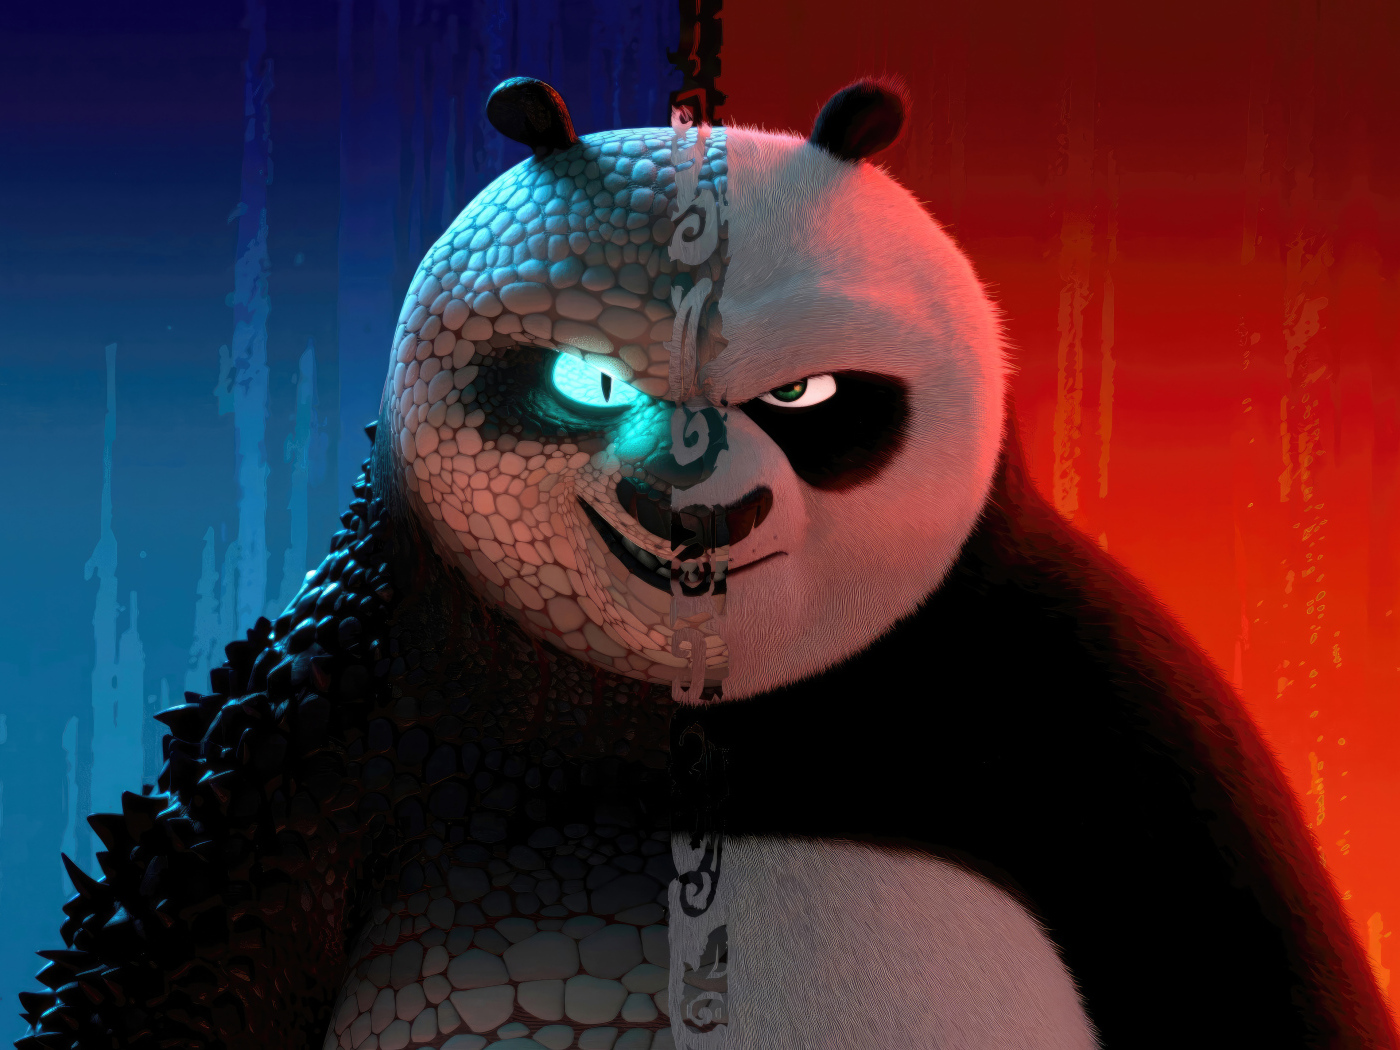 The good and evil side of Po cartoon Kung Fu Panda 4